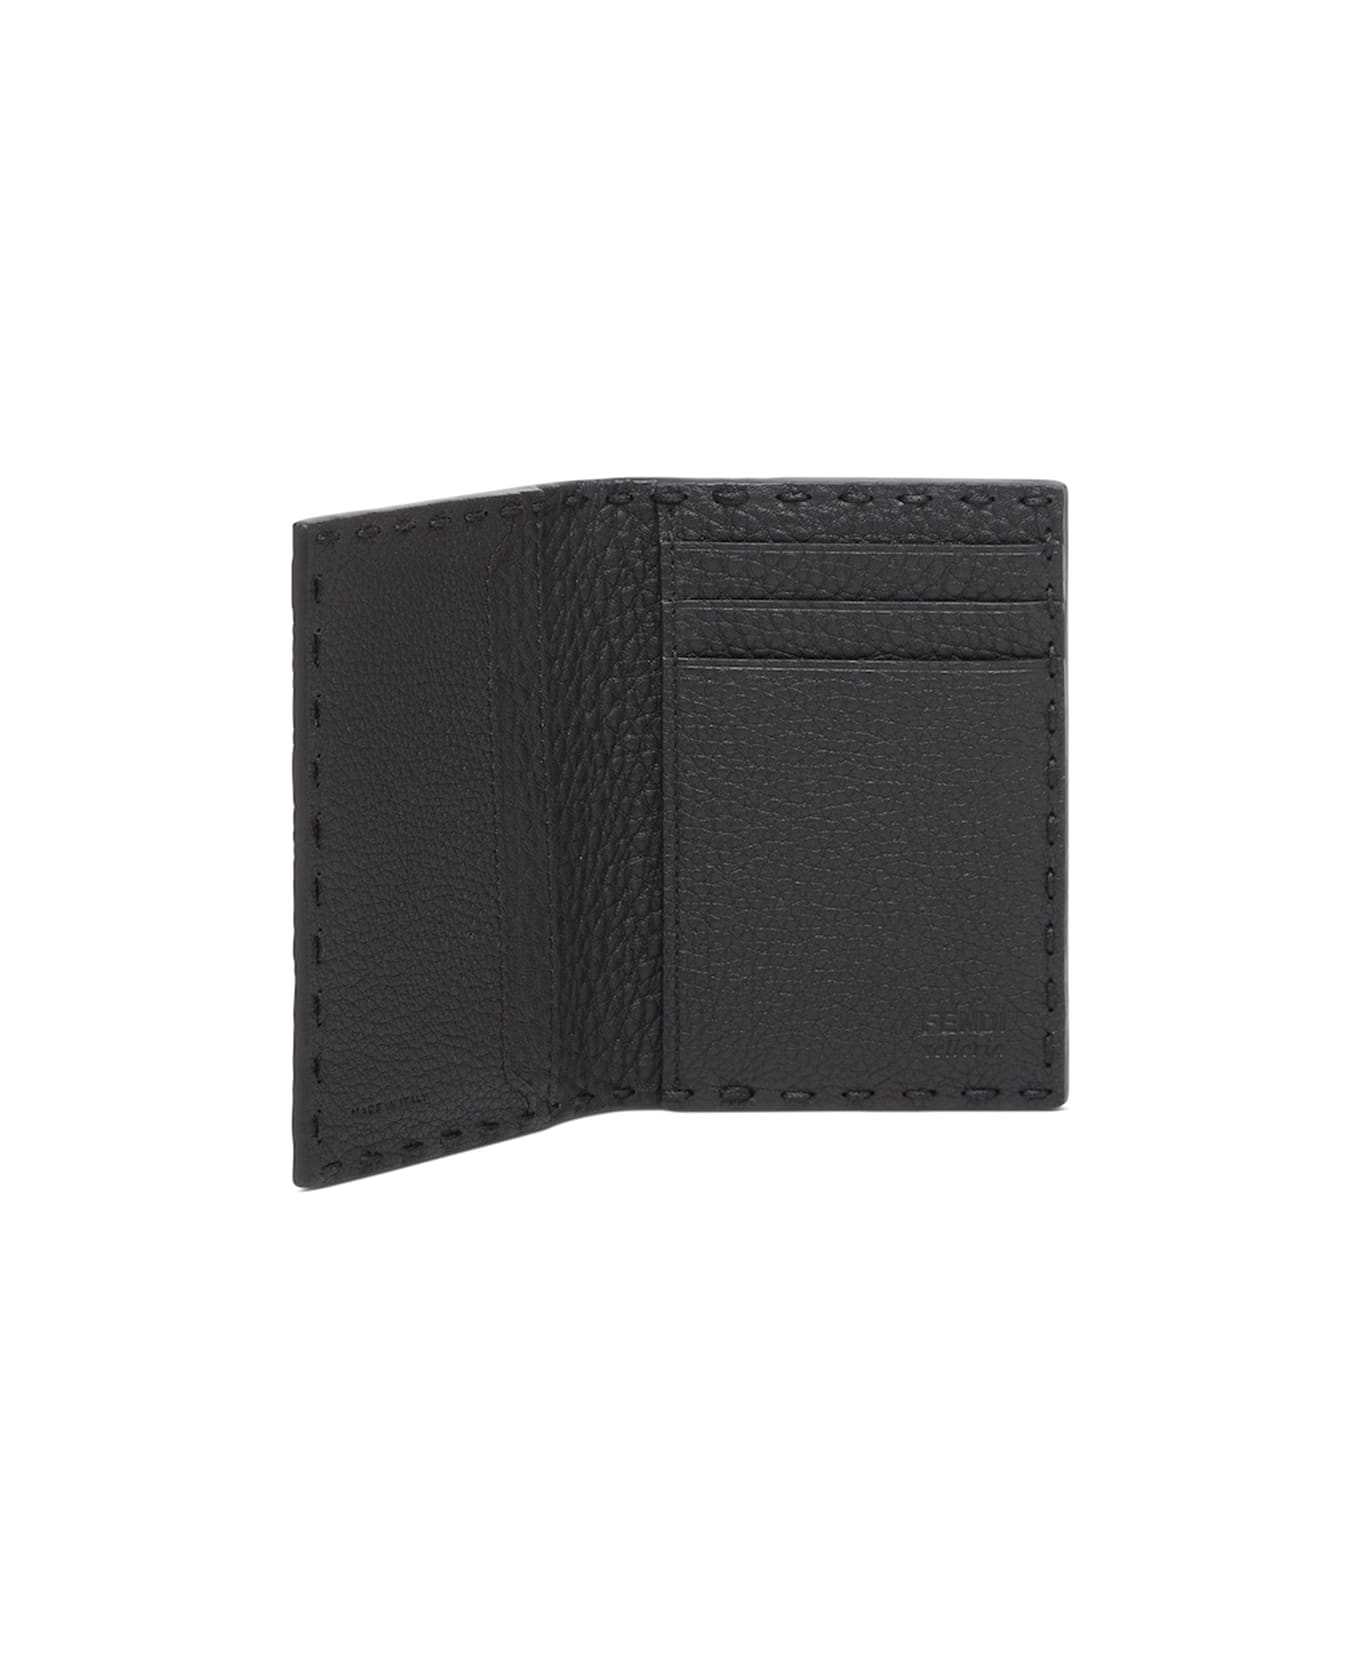 Fendi Black Leather Card Holder - NERO PALLADIO 財布